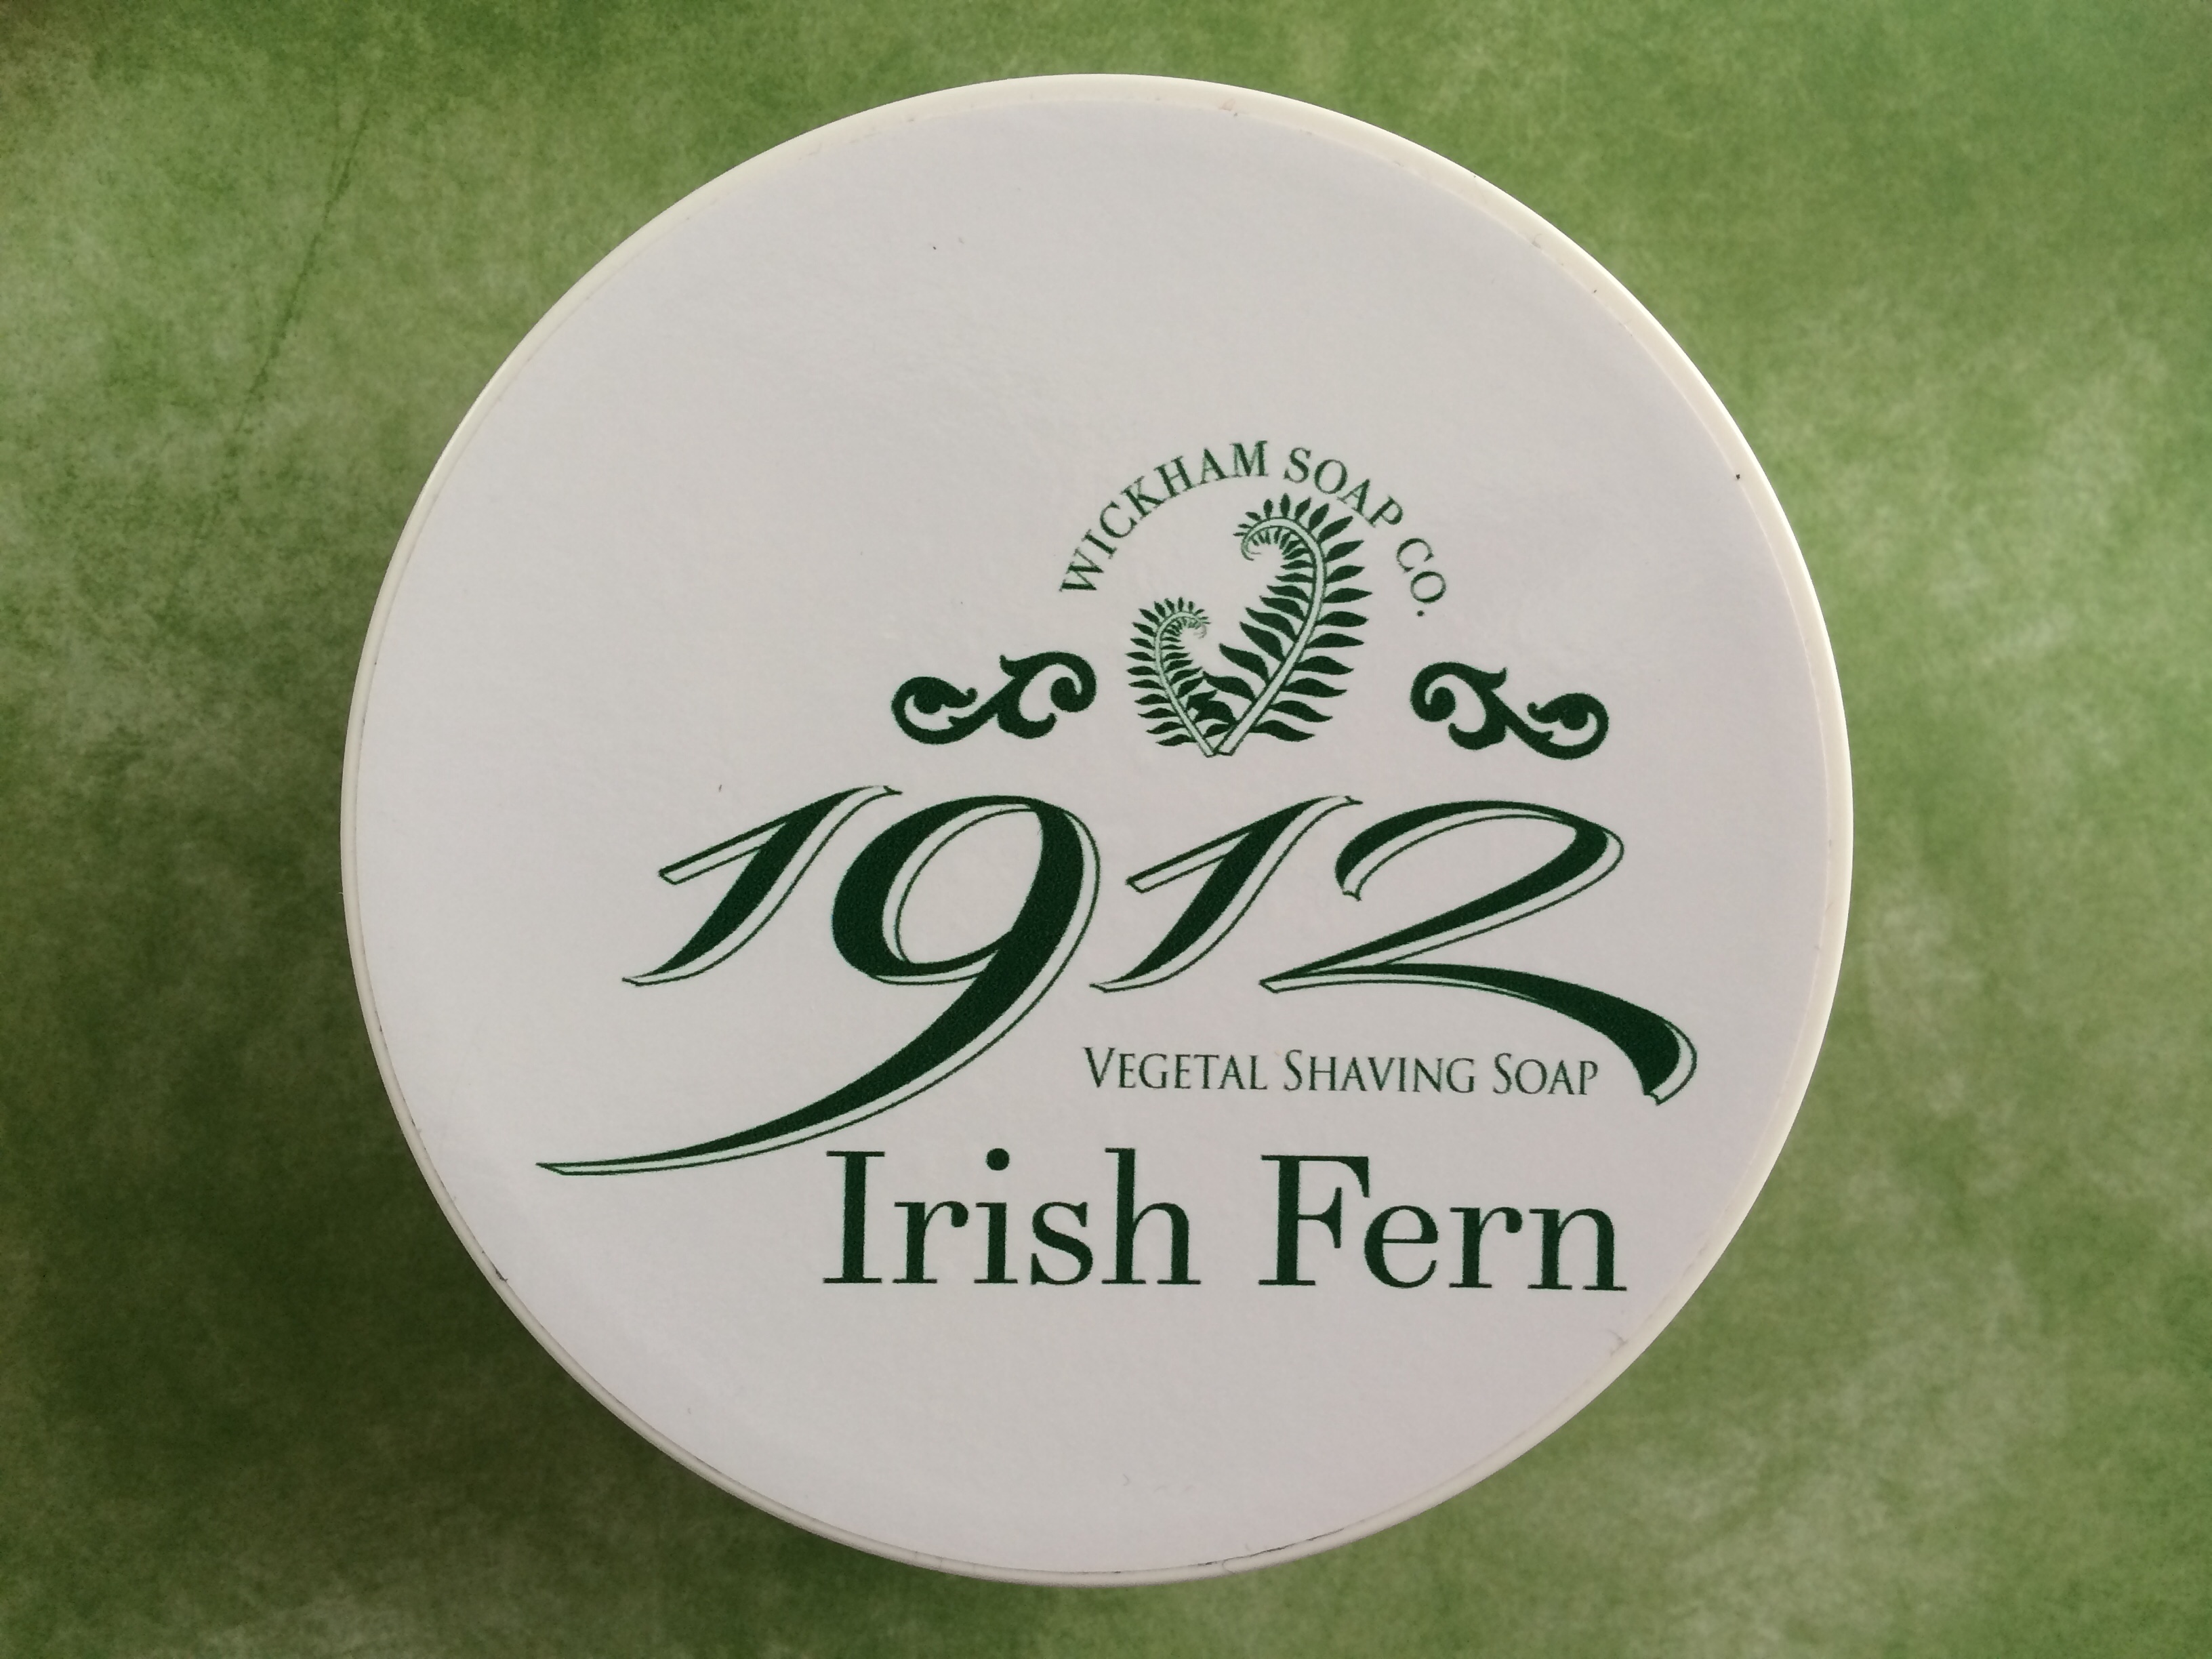 Wickham 1912 Irish Fern Shaving Soap | Agent Shave